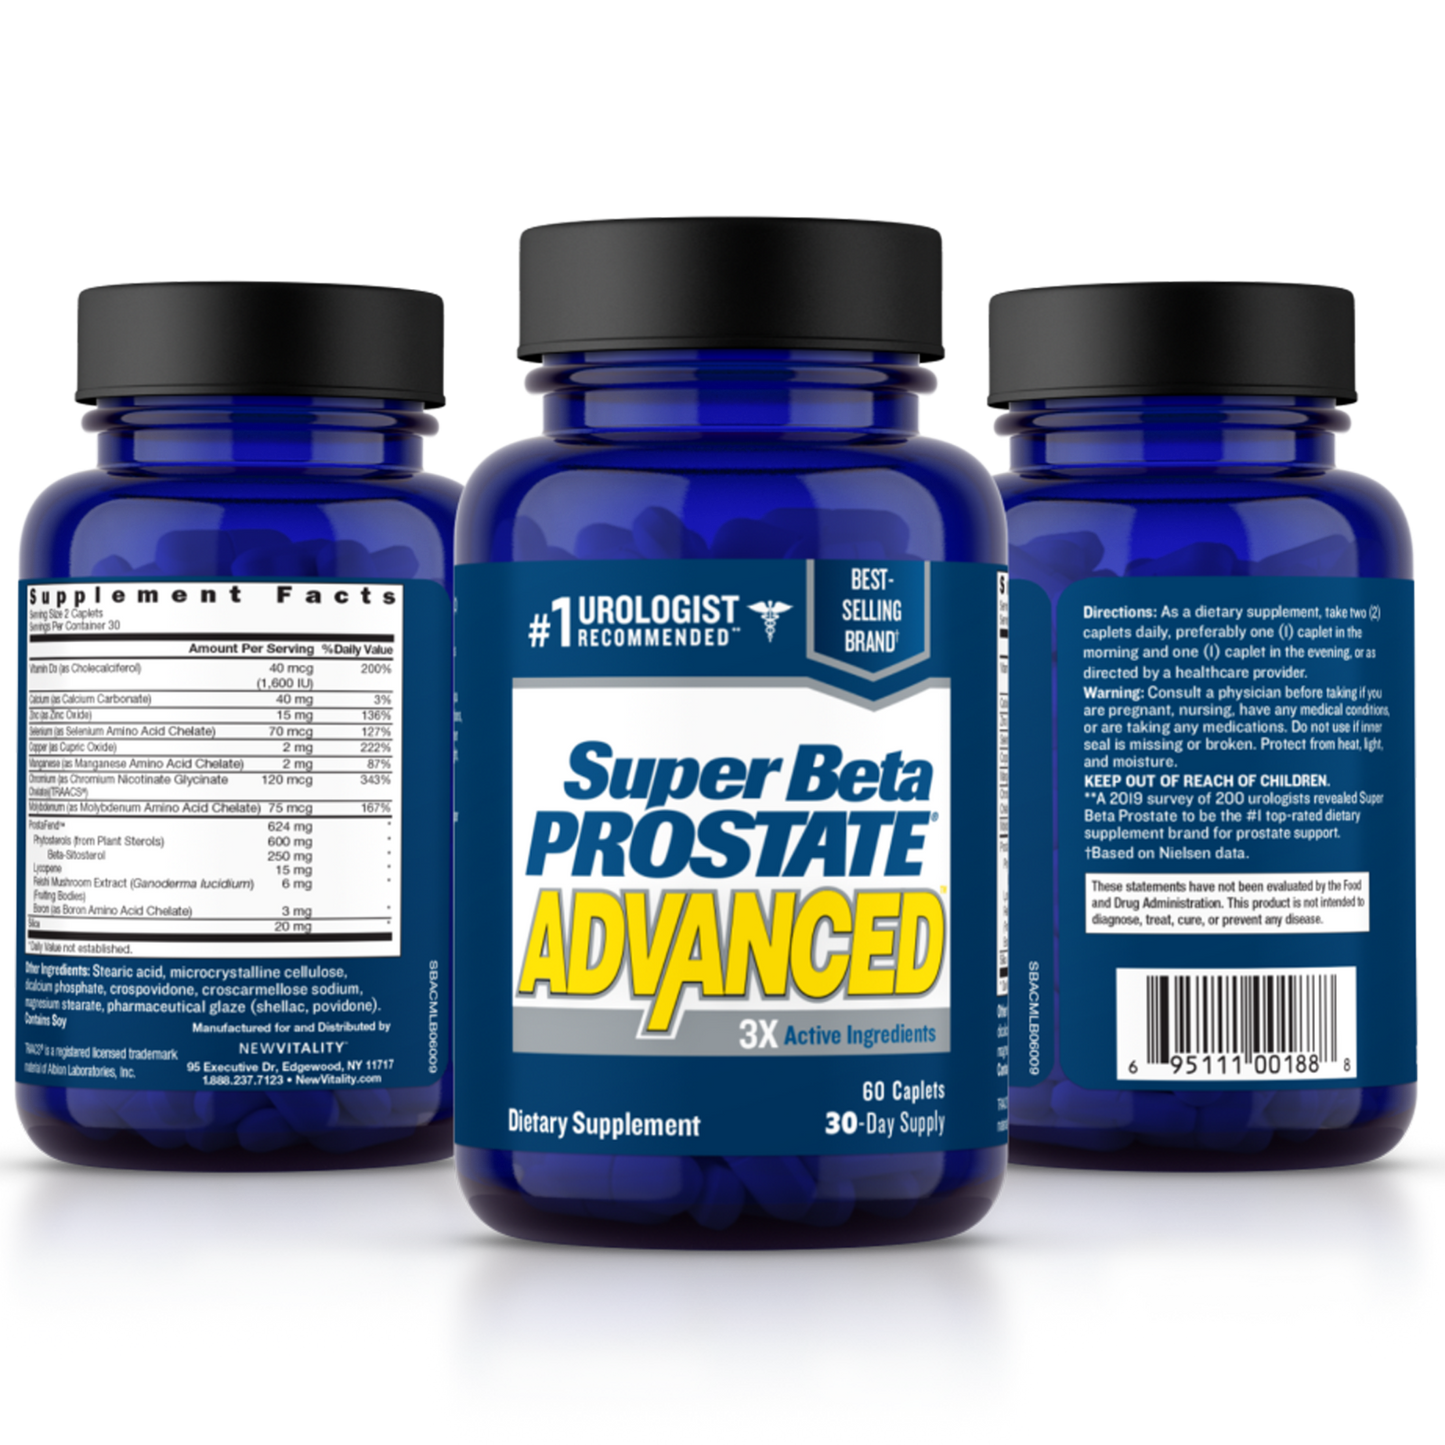 Super Beta Prostate Advanced - Prostate Supplement for Men